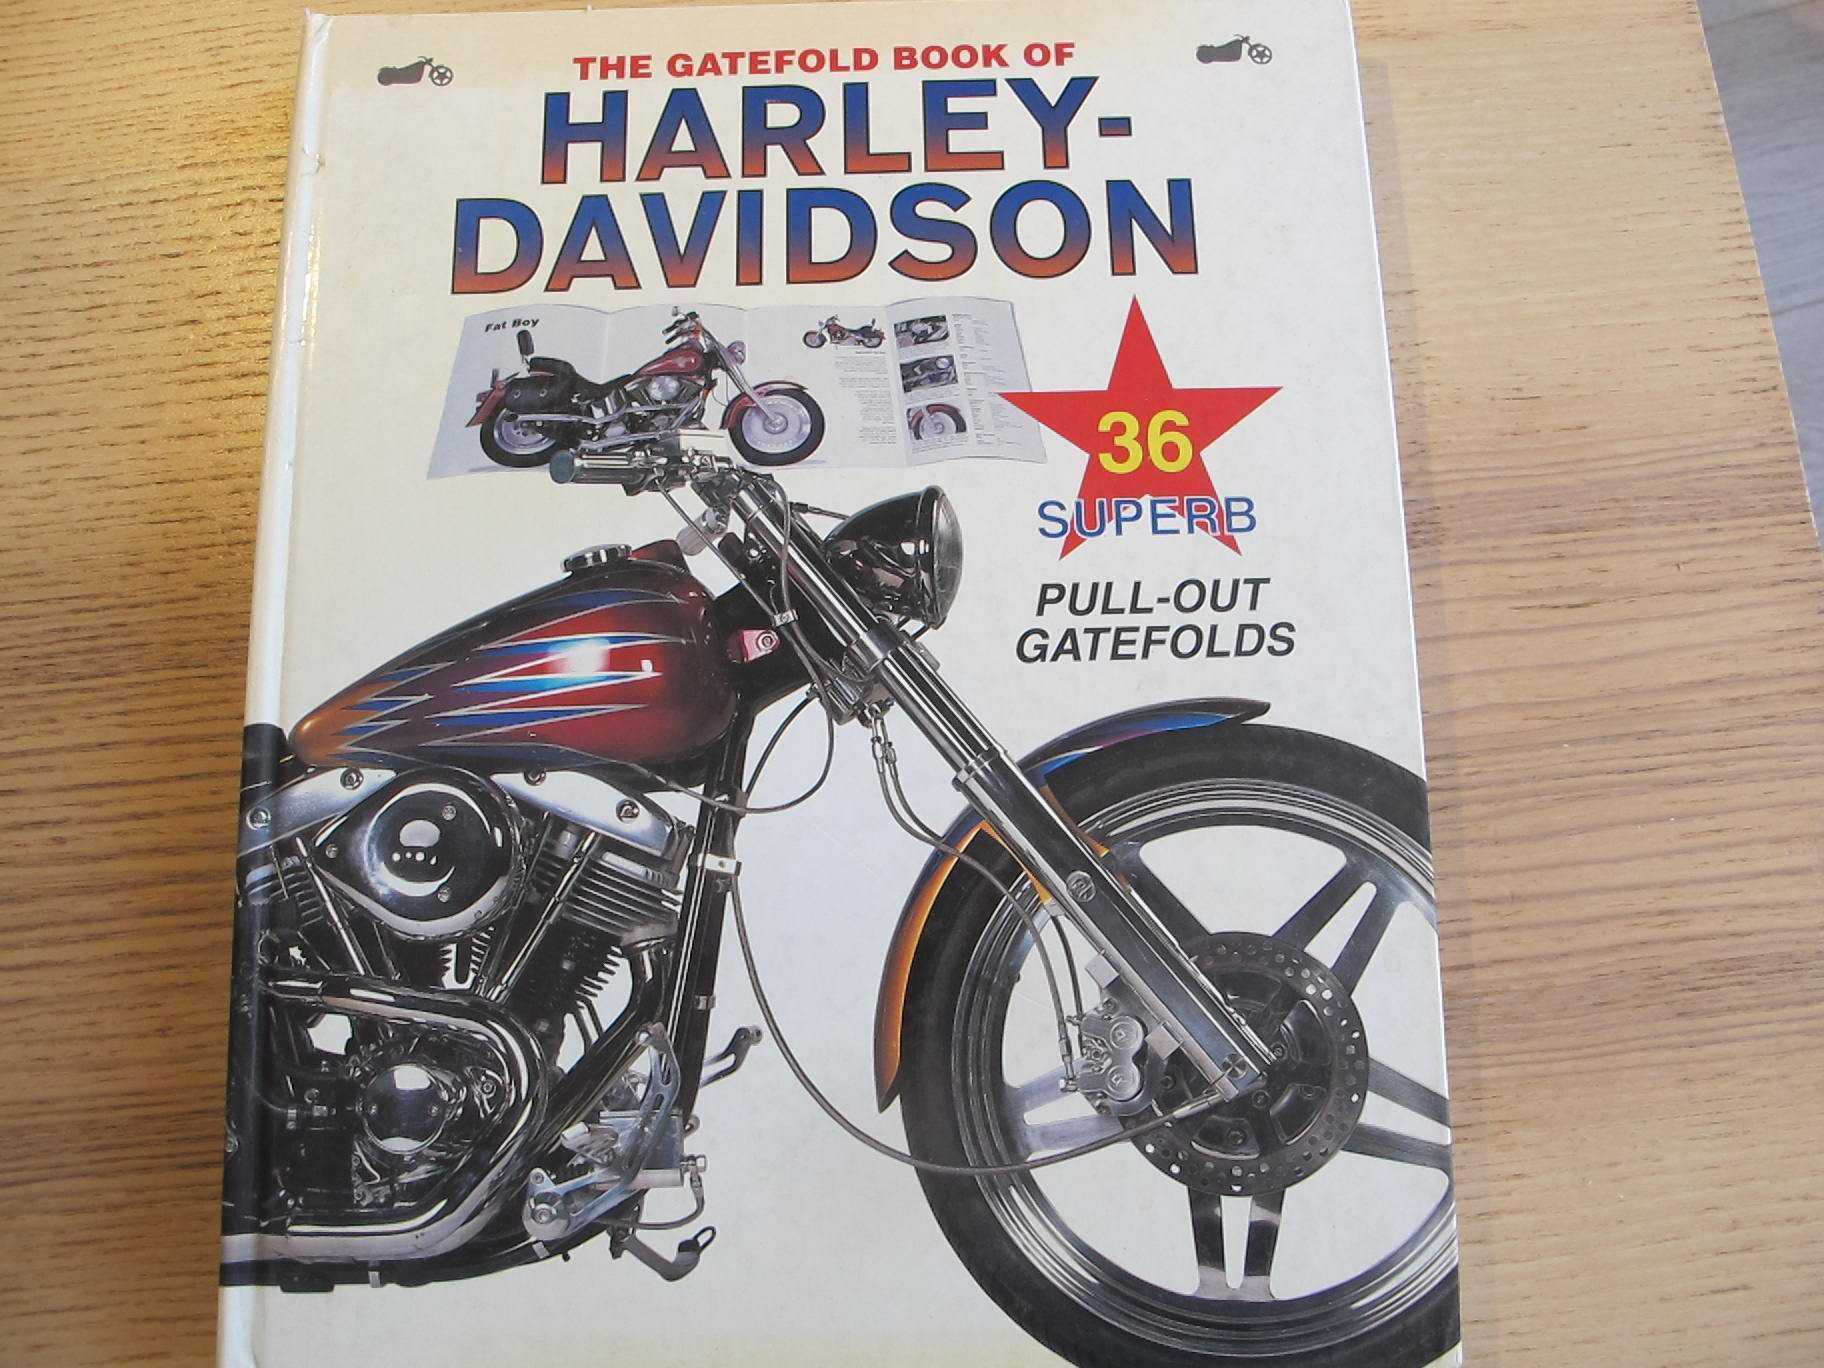 The gatefold book of Harley Davidson